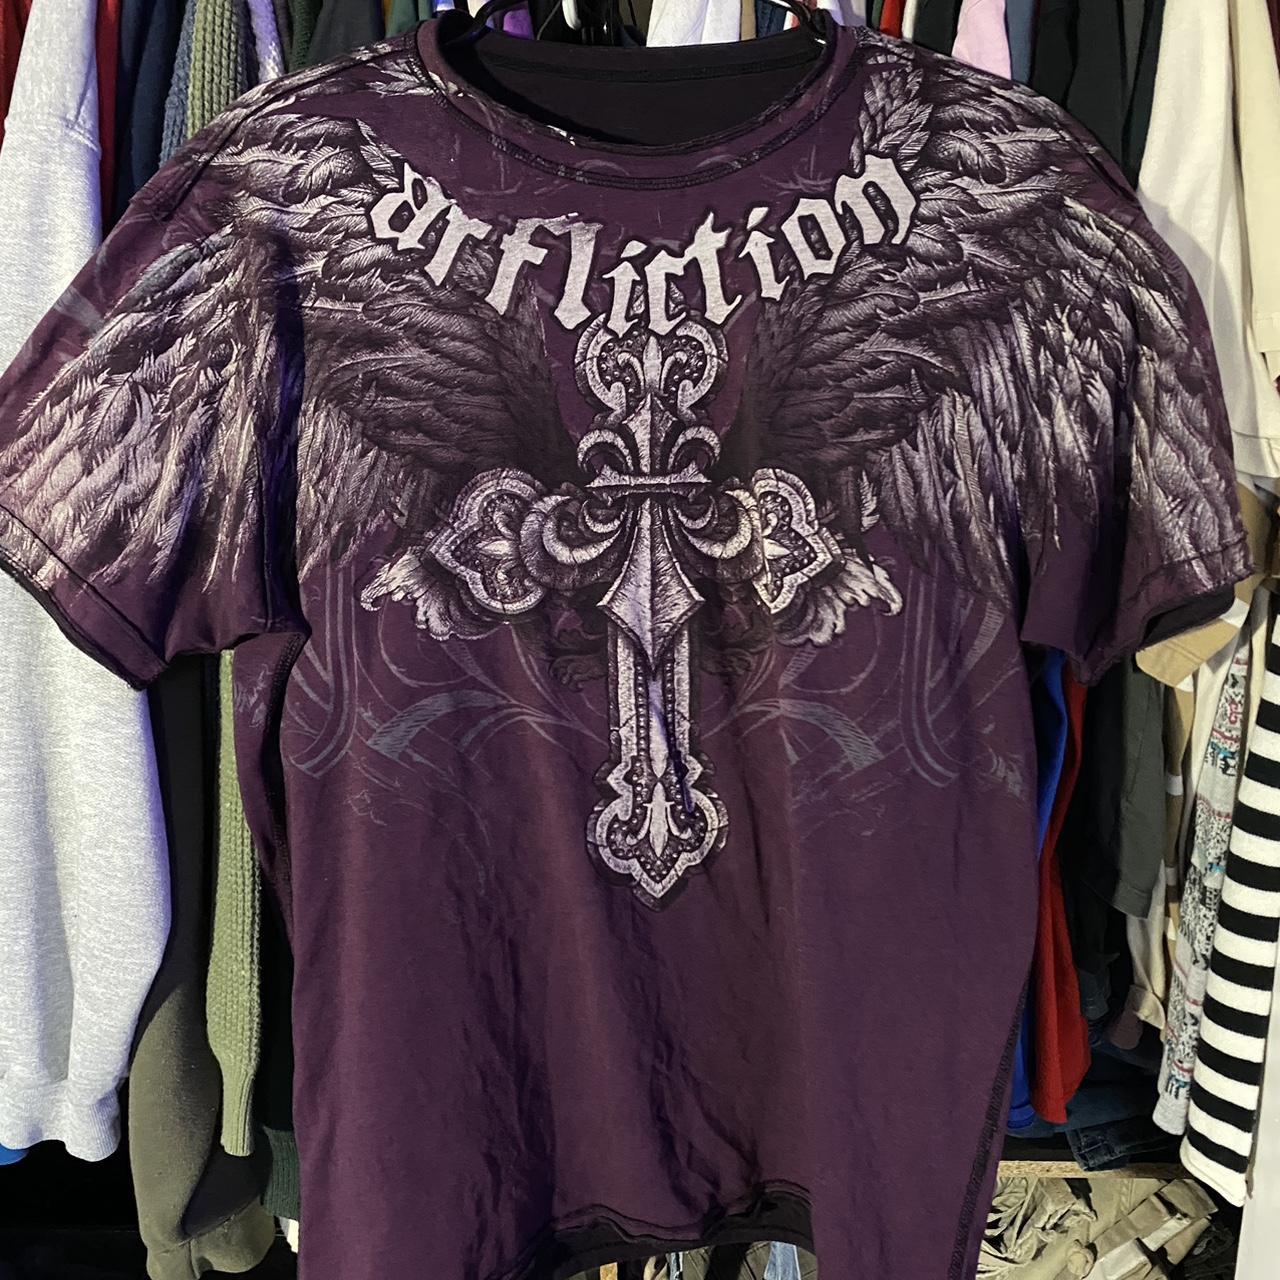 Affliction Men's Purple and Black T-shirt